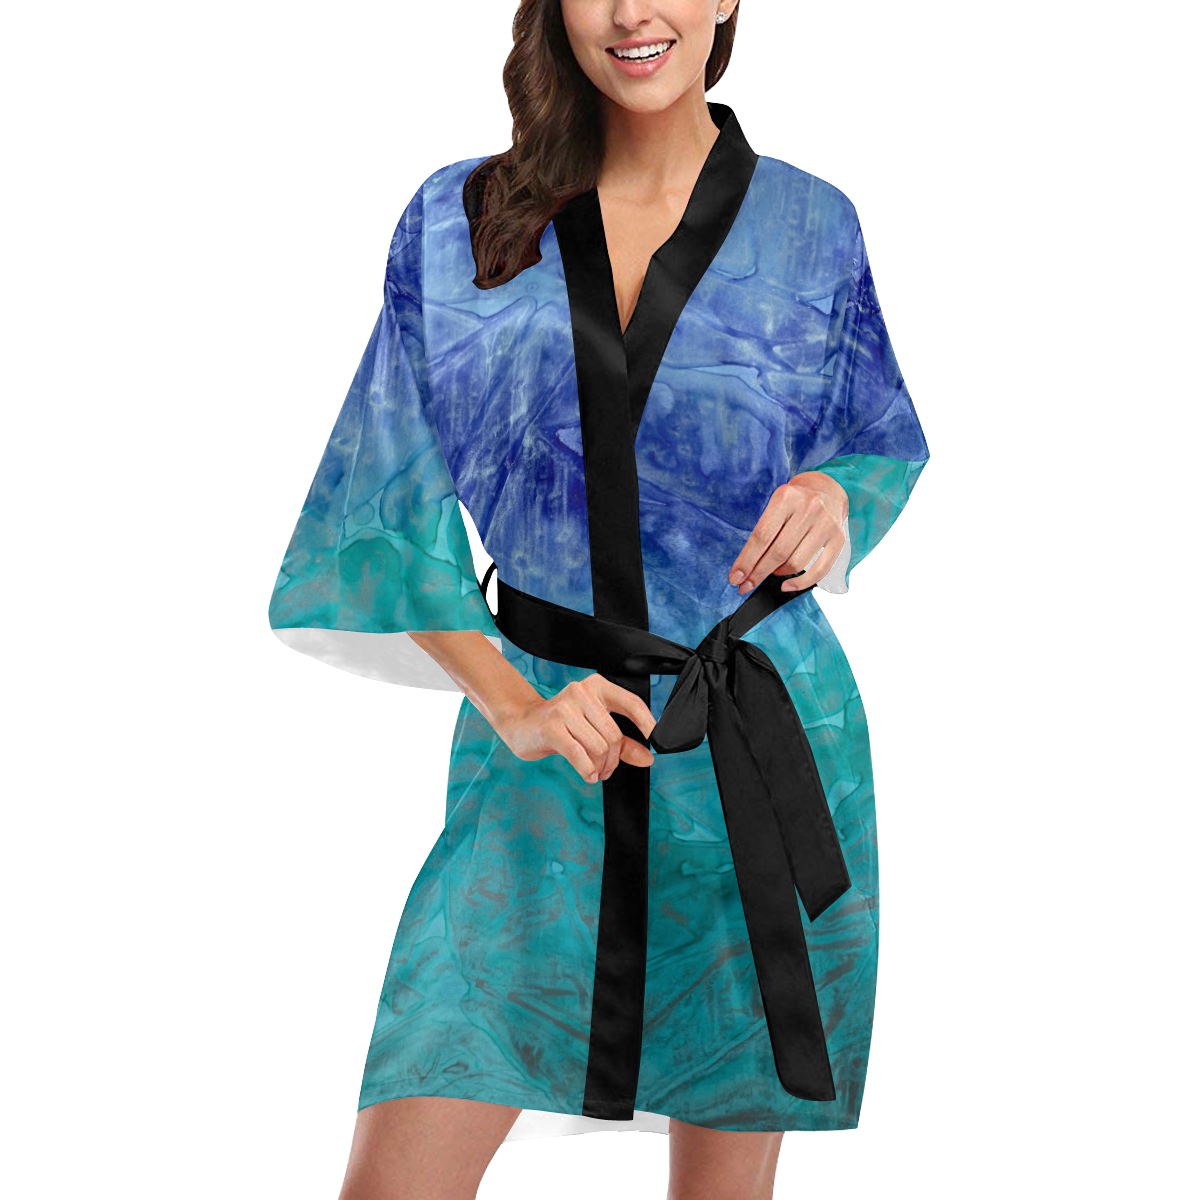 alcoholandink Kimono Robe